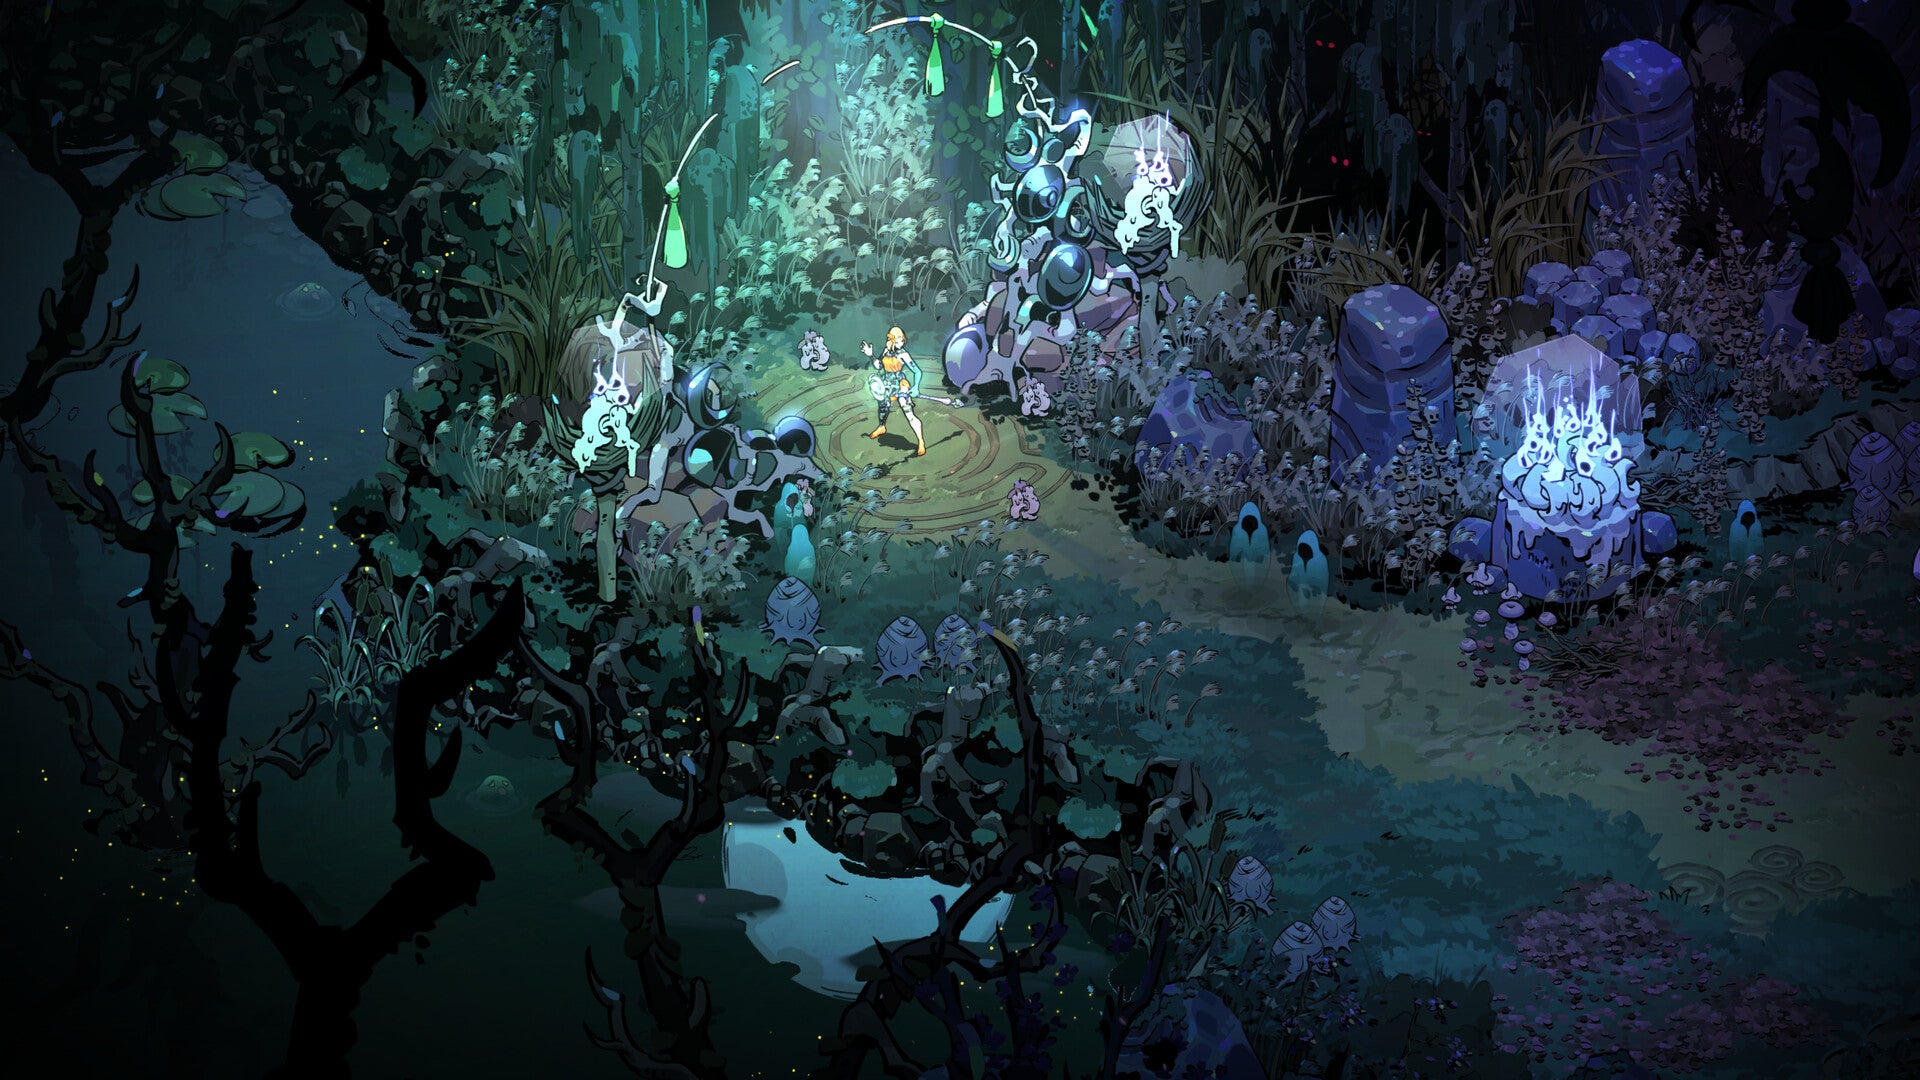 《Hades 2》。一个发光的角色站在一片森林的空地上……有一种超凡的感觉。